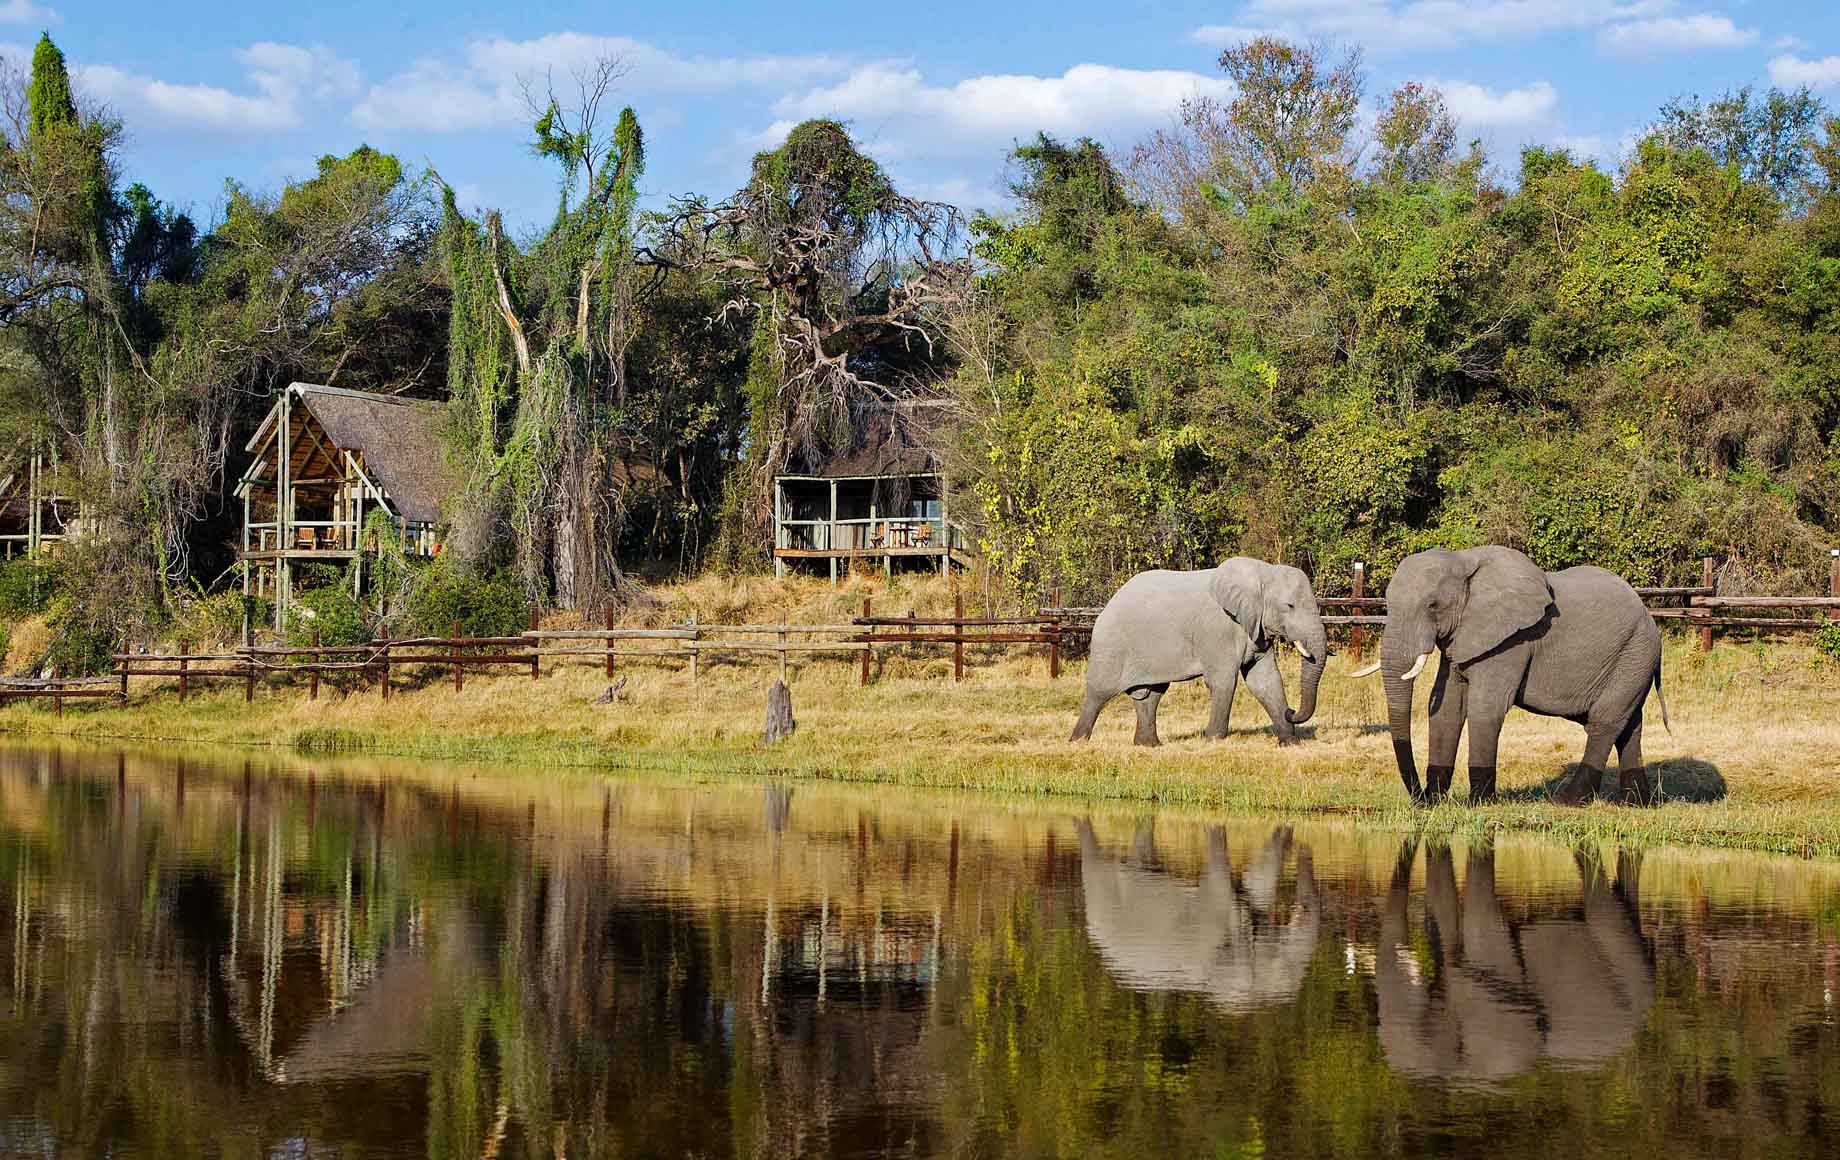 Elephants in peace next to lake at Savuti Chobe African Safari